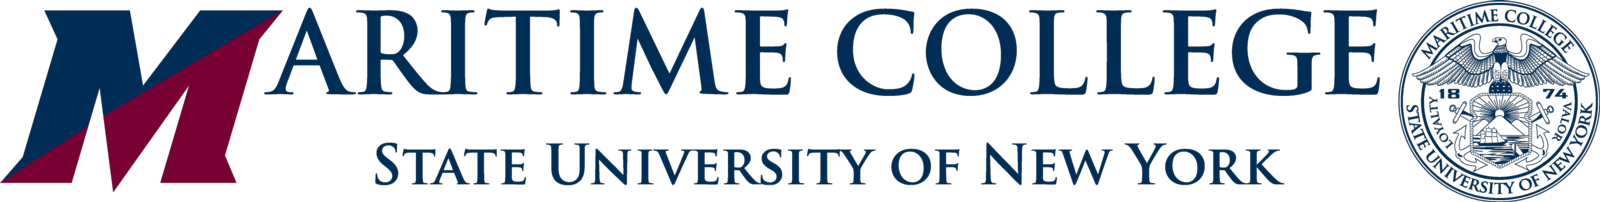 Maritime College logo